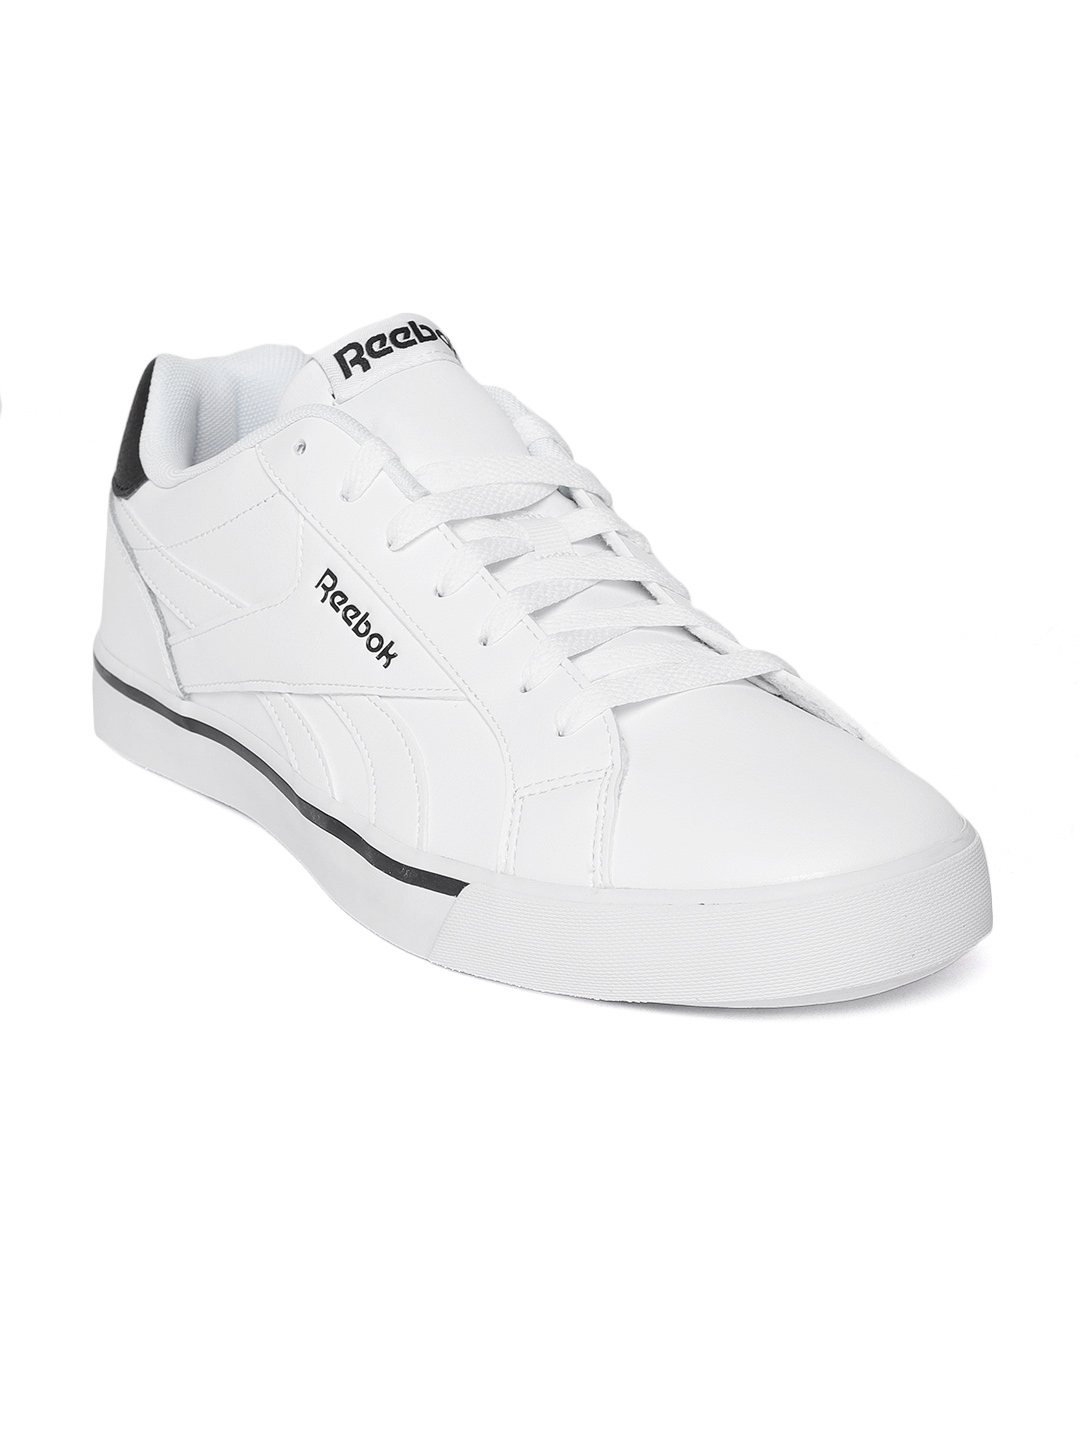 Mens Reebok Club C 85 Athletic Shoe - White / Light Gray | Journeys-omiya.com.vn